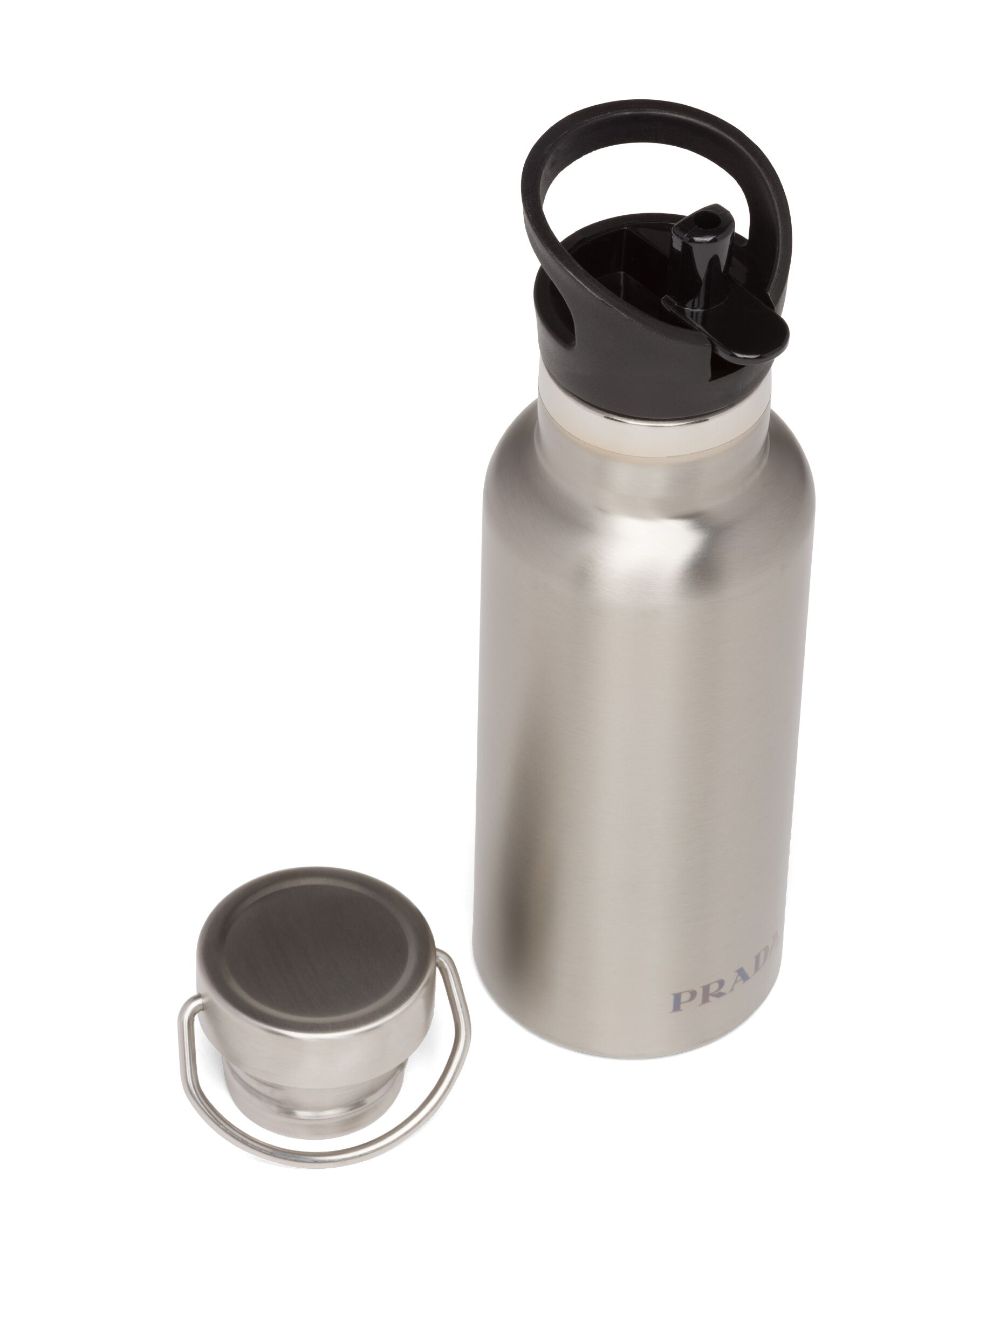 Prada, Accessories, Prada Stainless Steel Water Bottle